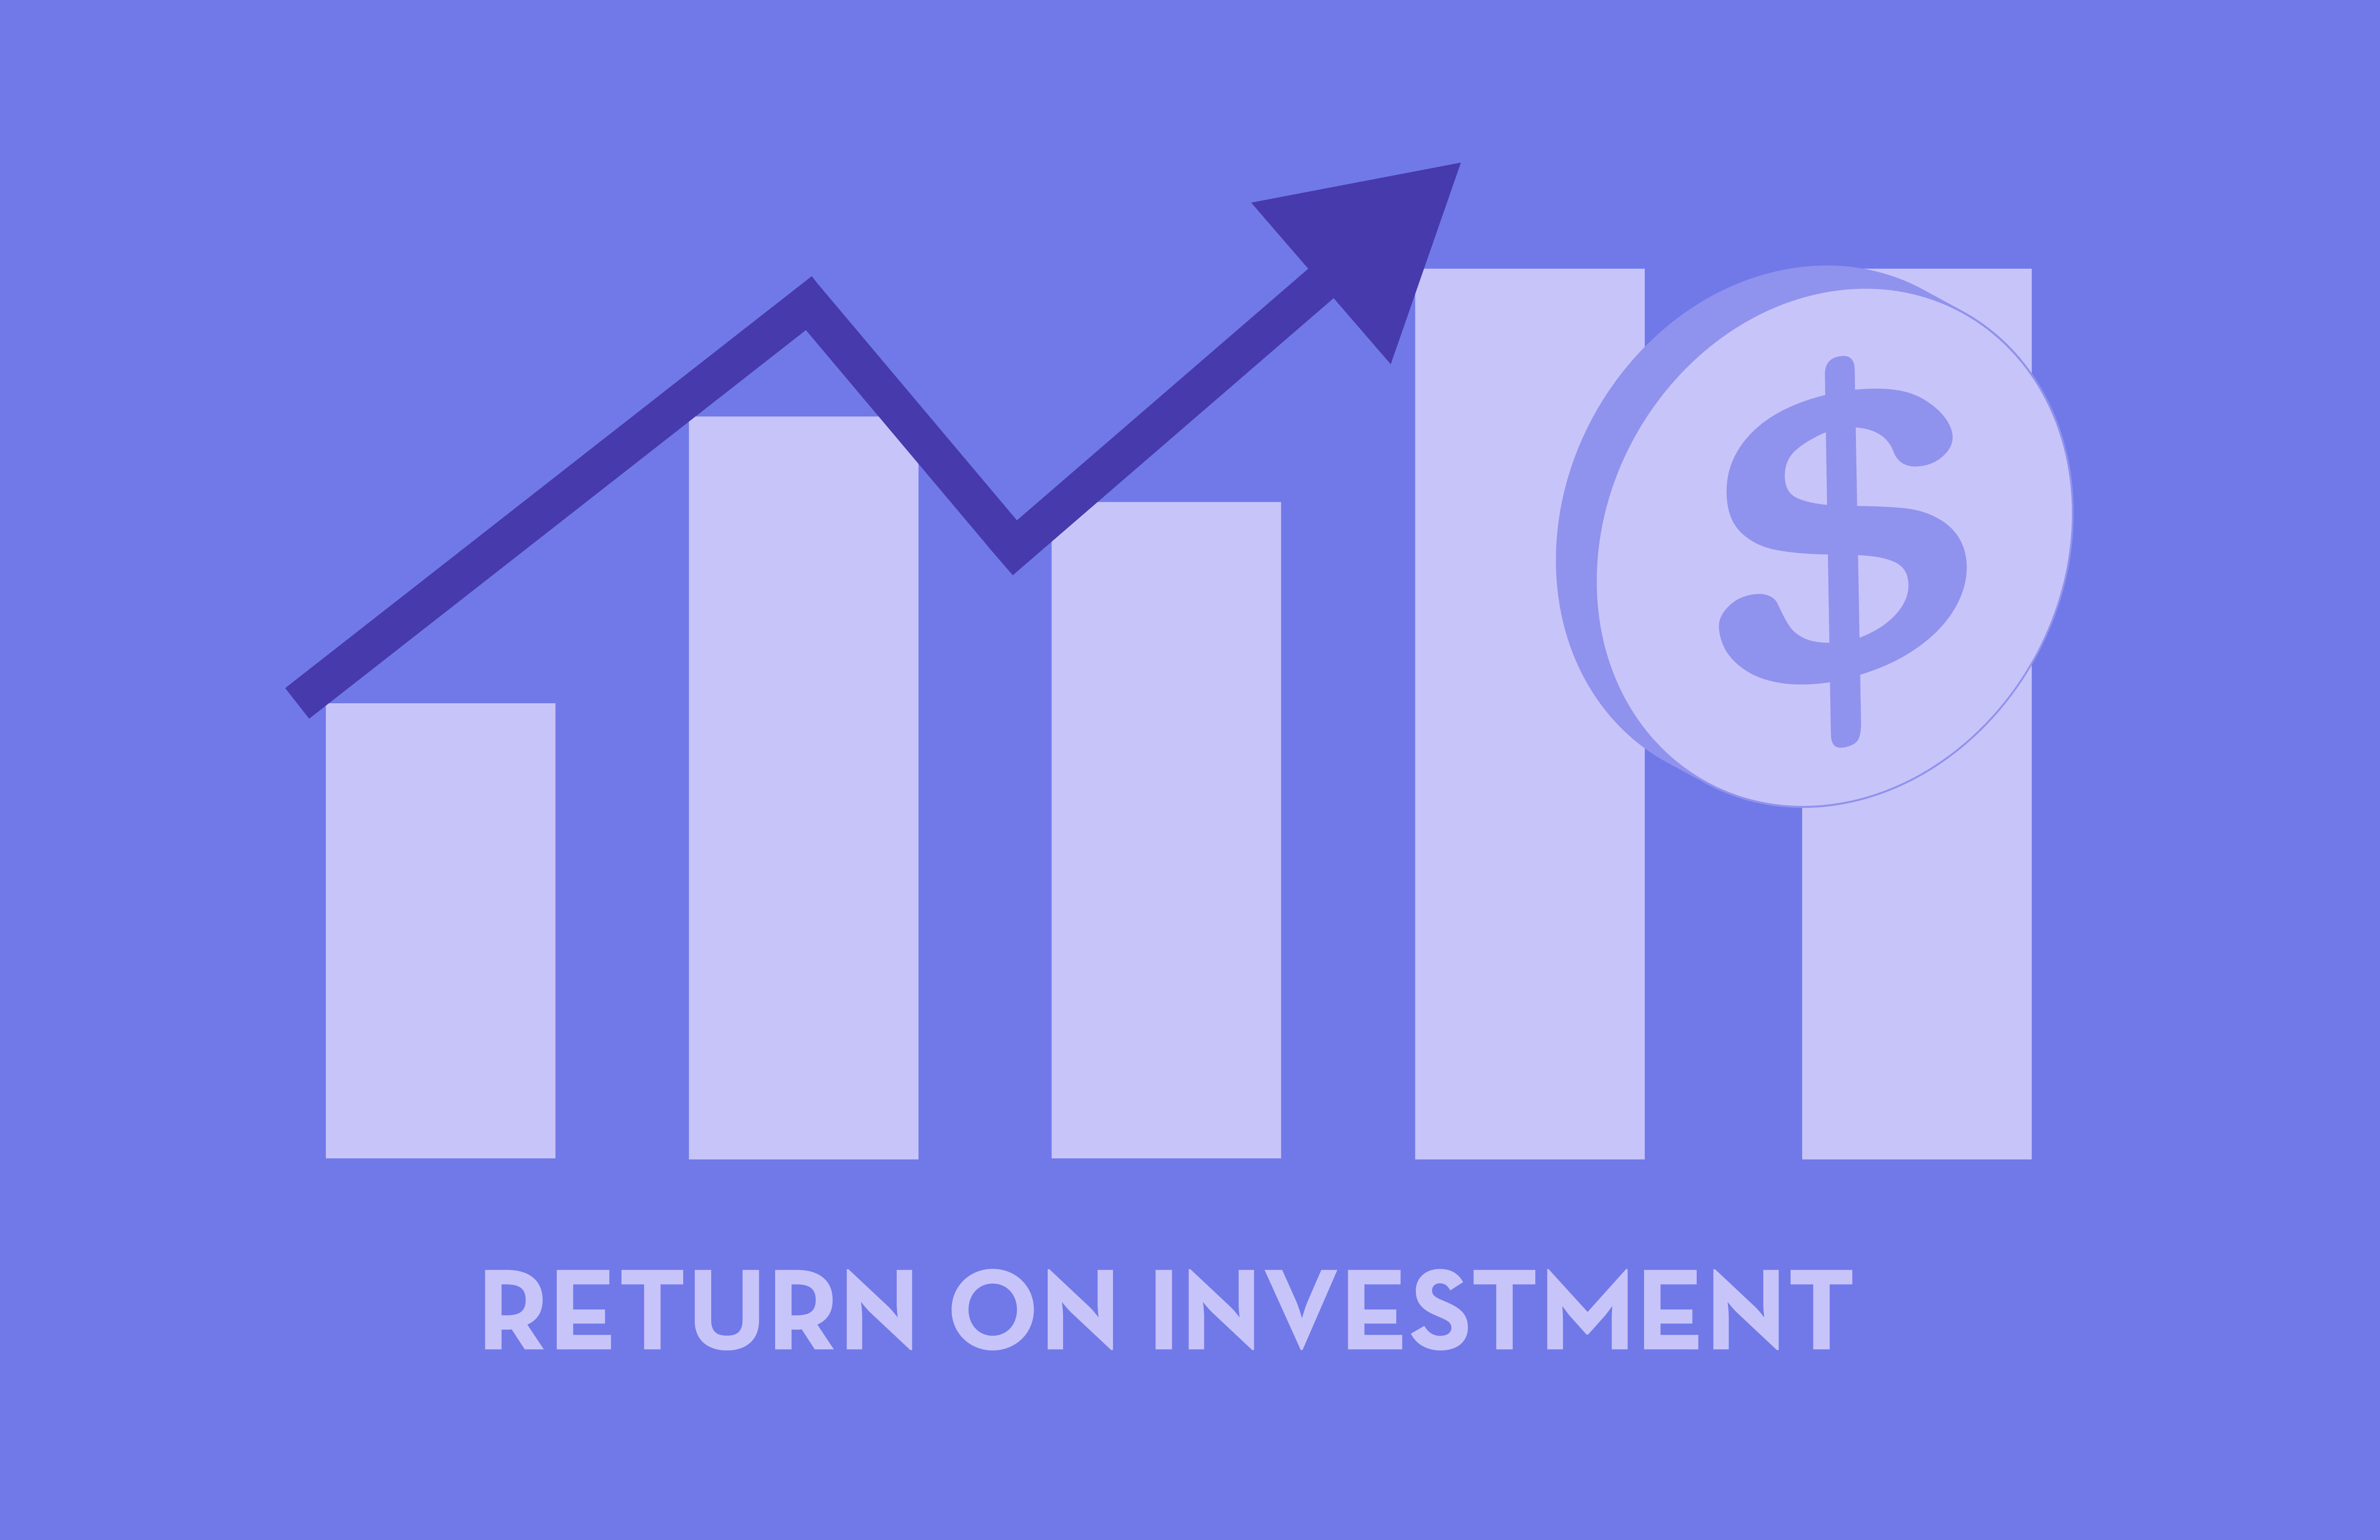 Return on Investment illustration